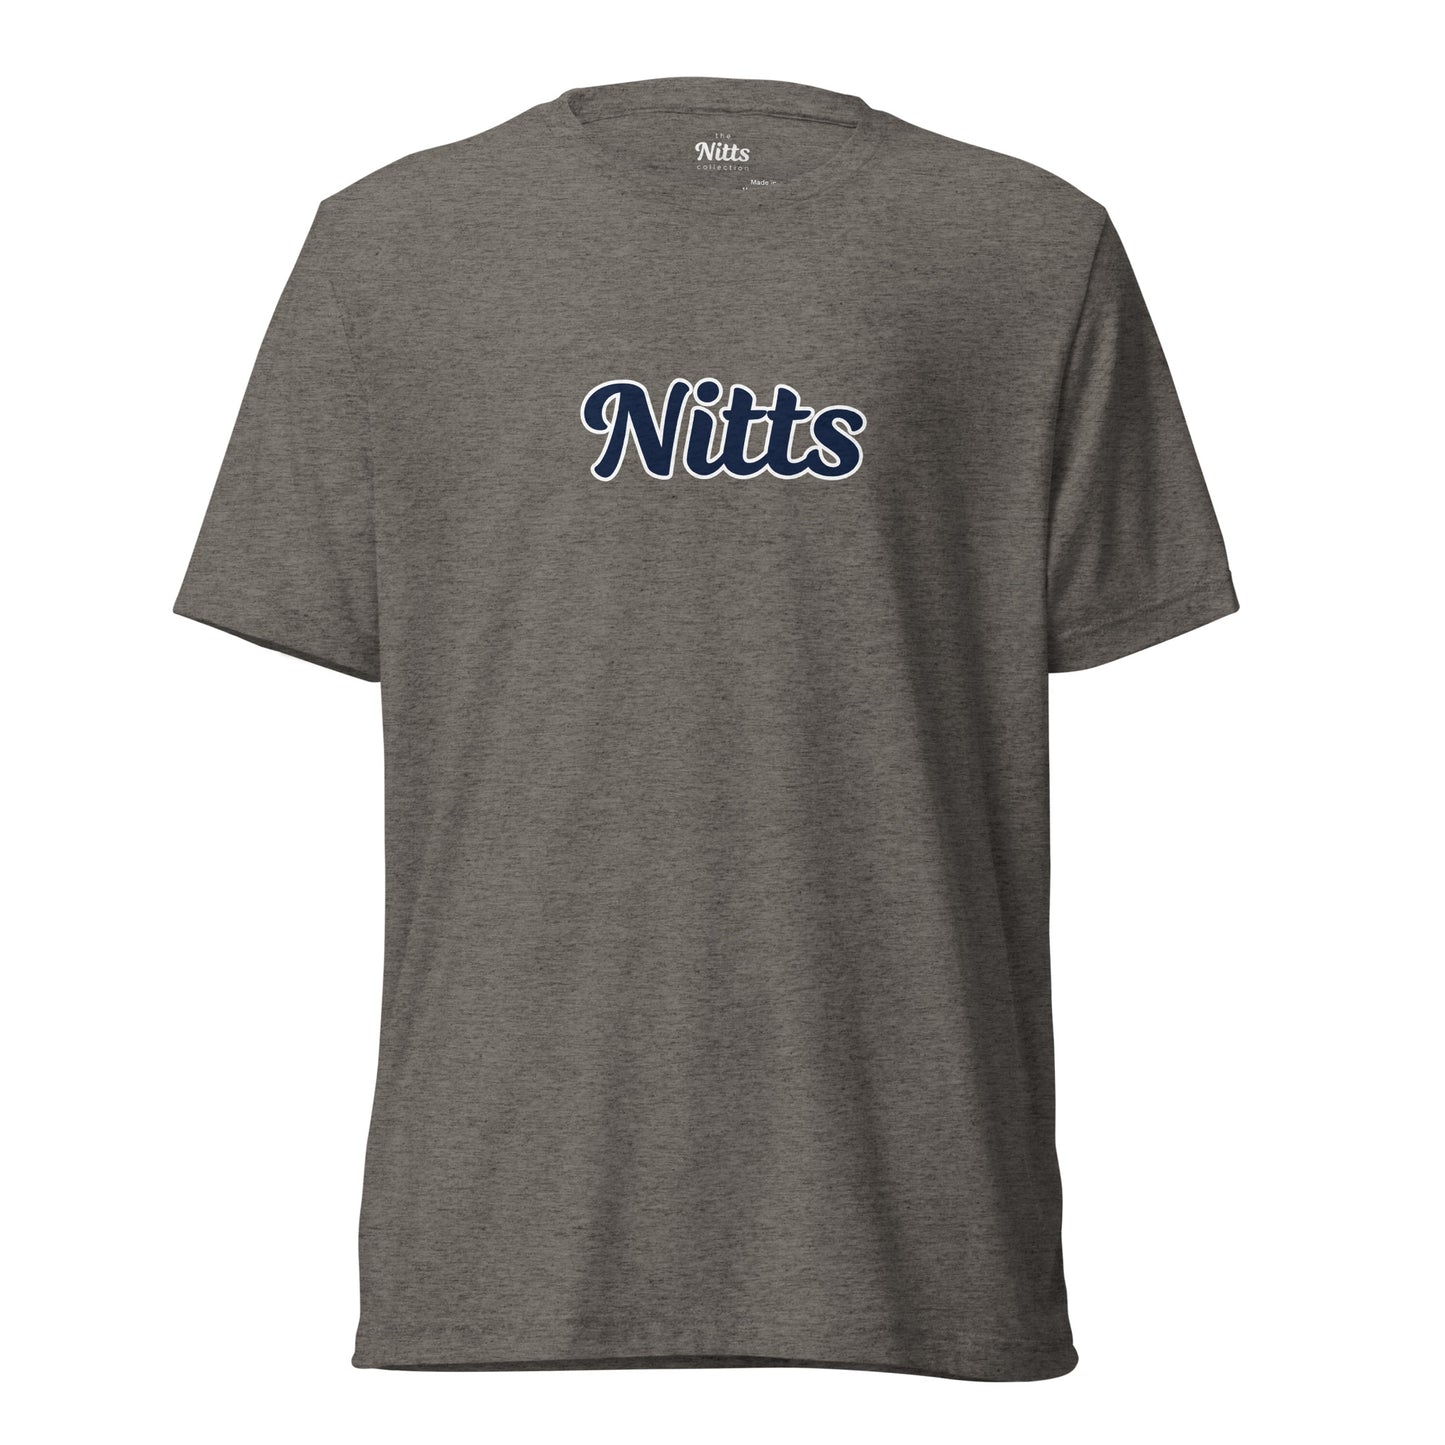 Nitts Classic short sleeve tri-blend tee - grey heather